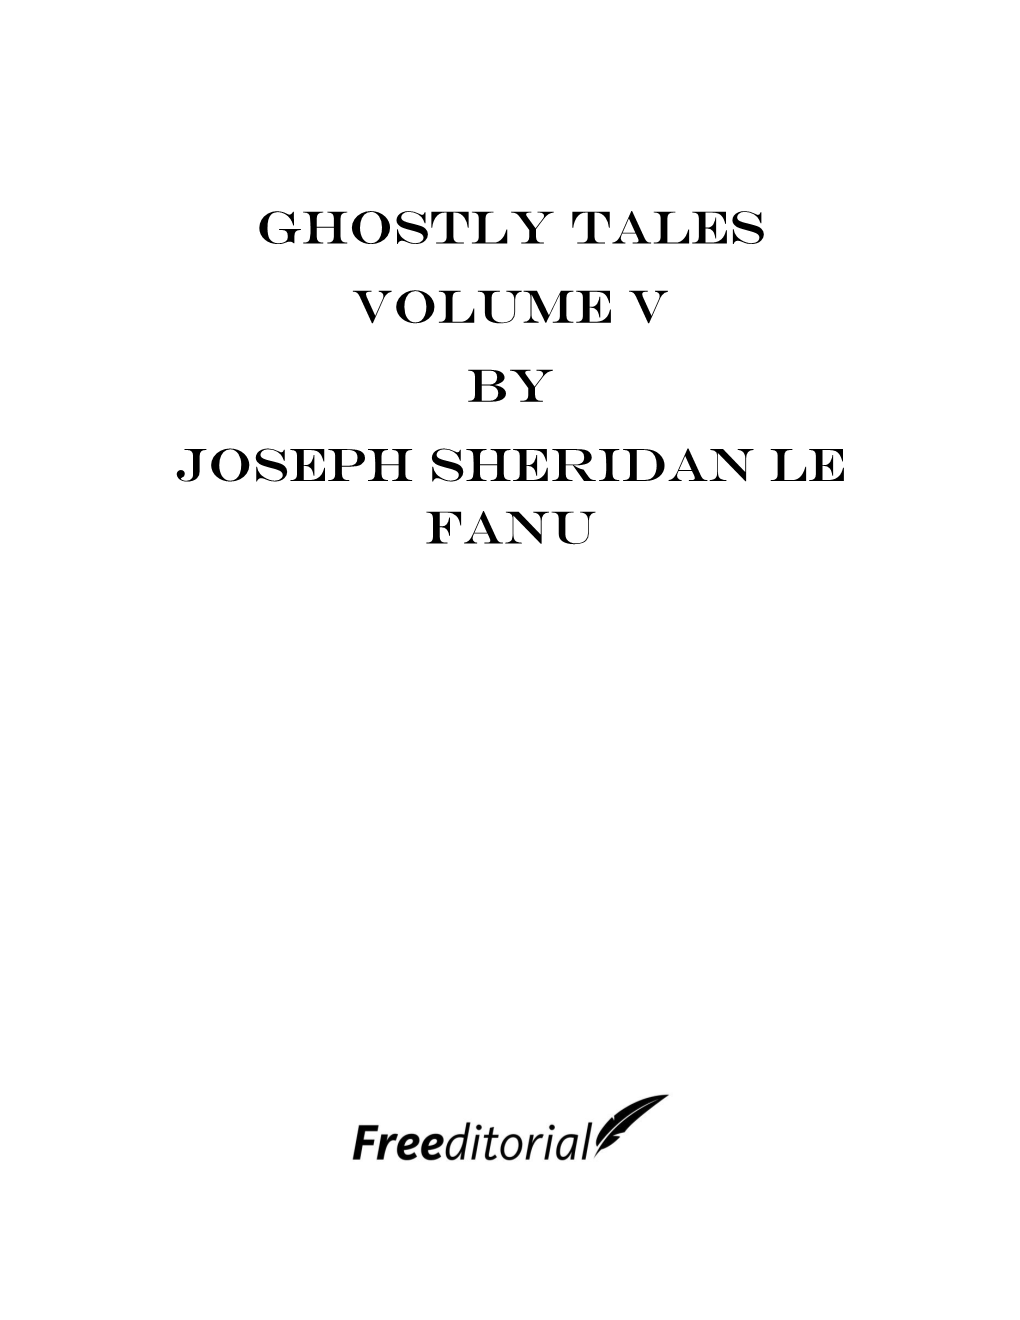 Ghostly Tales Volume V by Joseph Sheridan Le Fanu